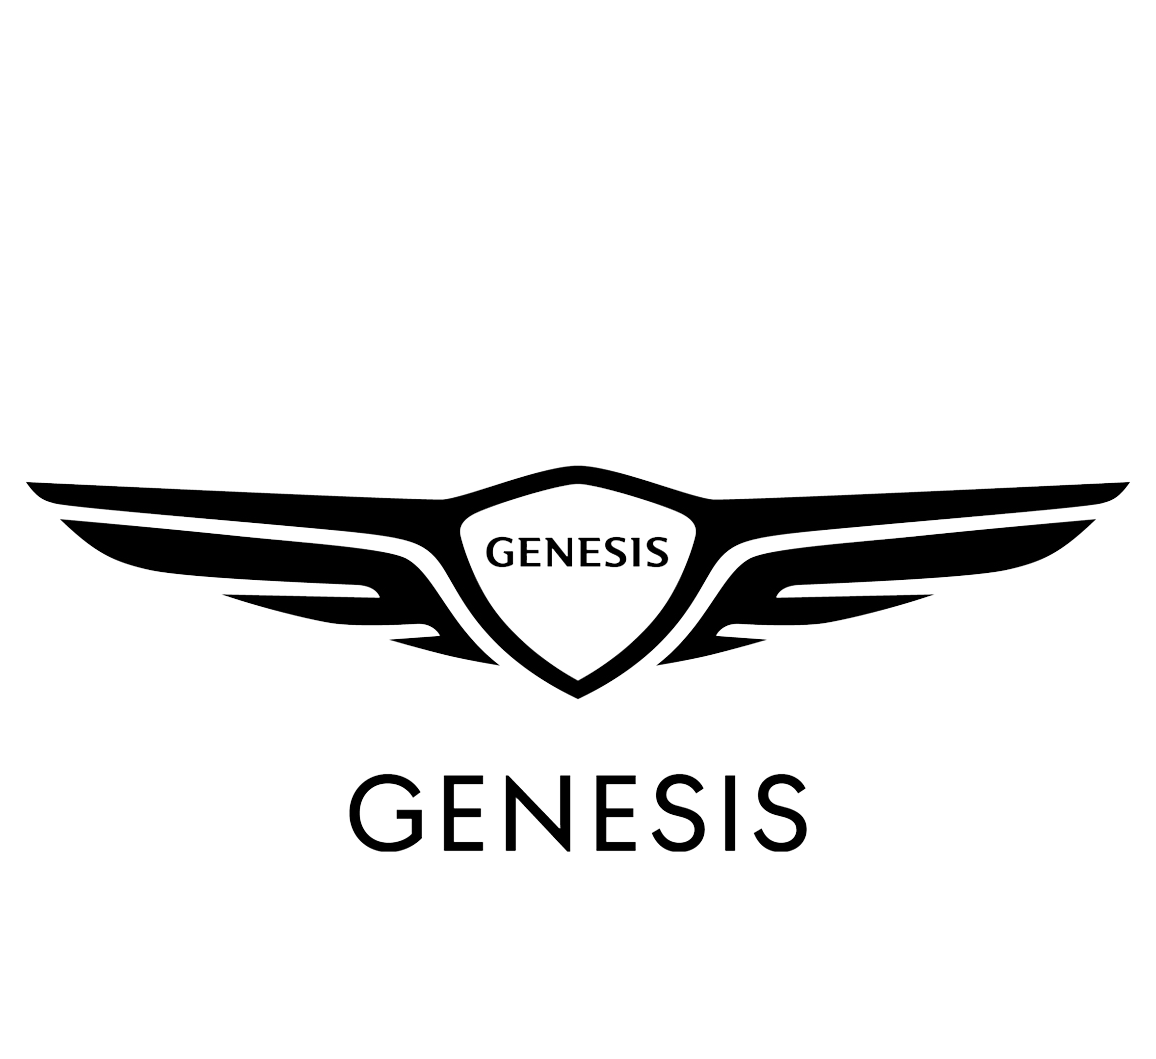 Genesis ecu remap